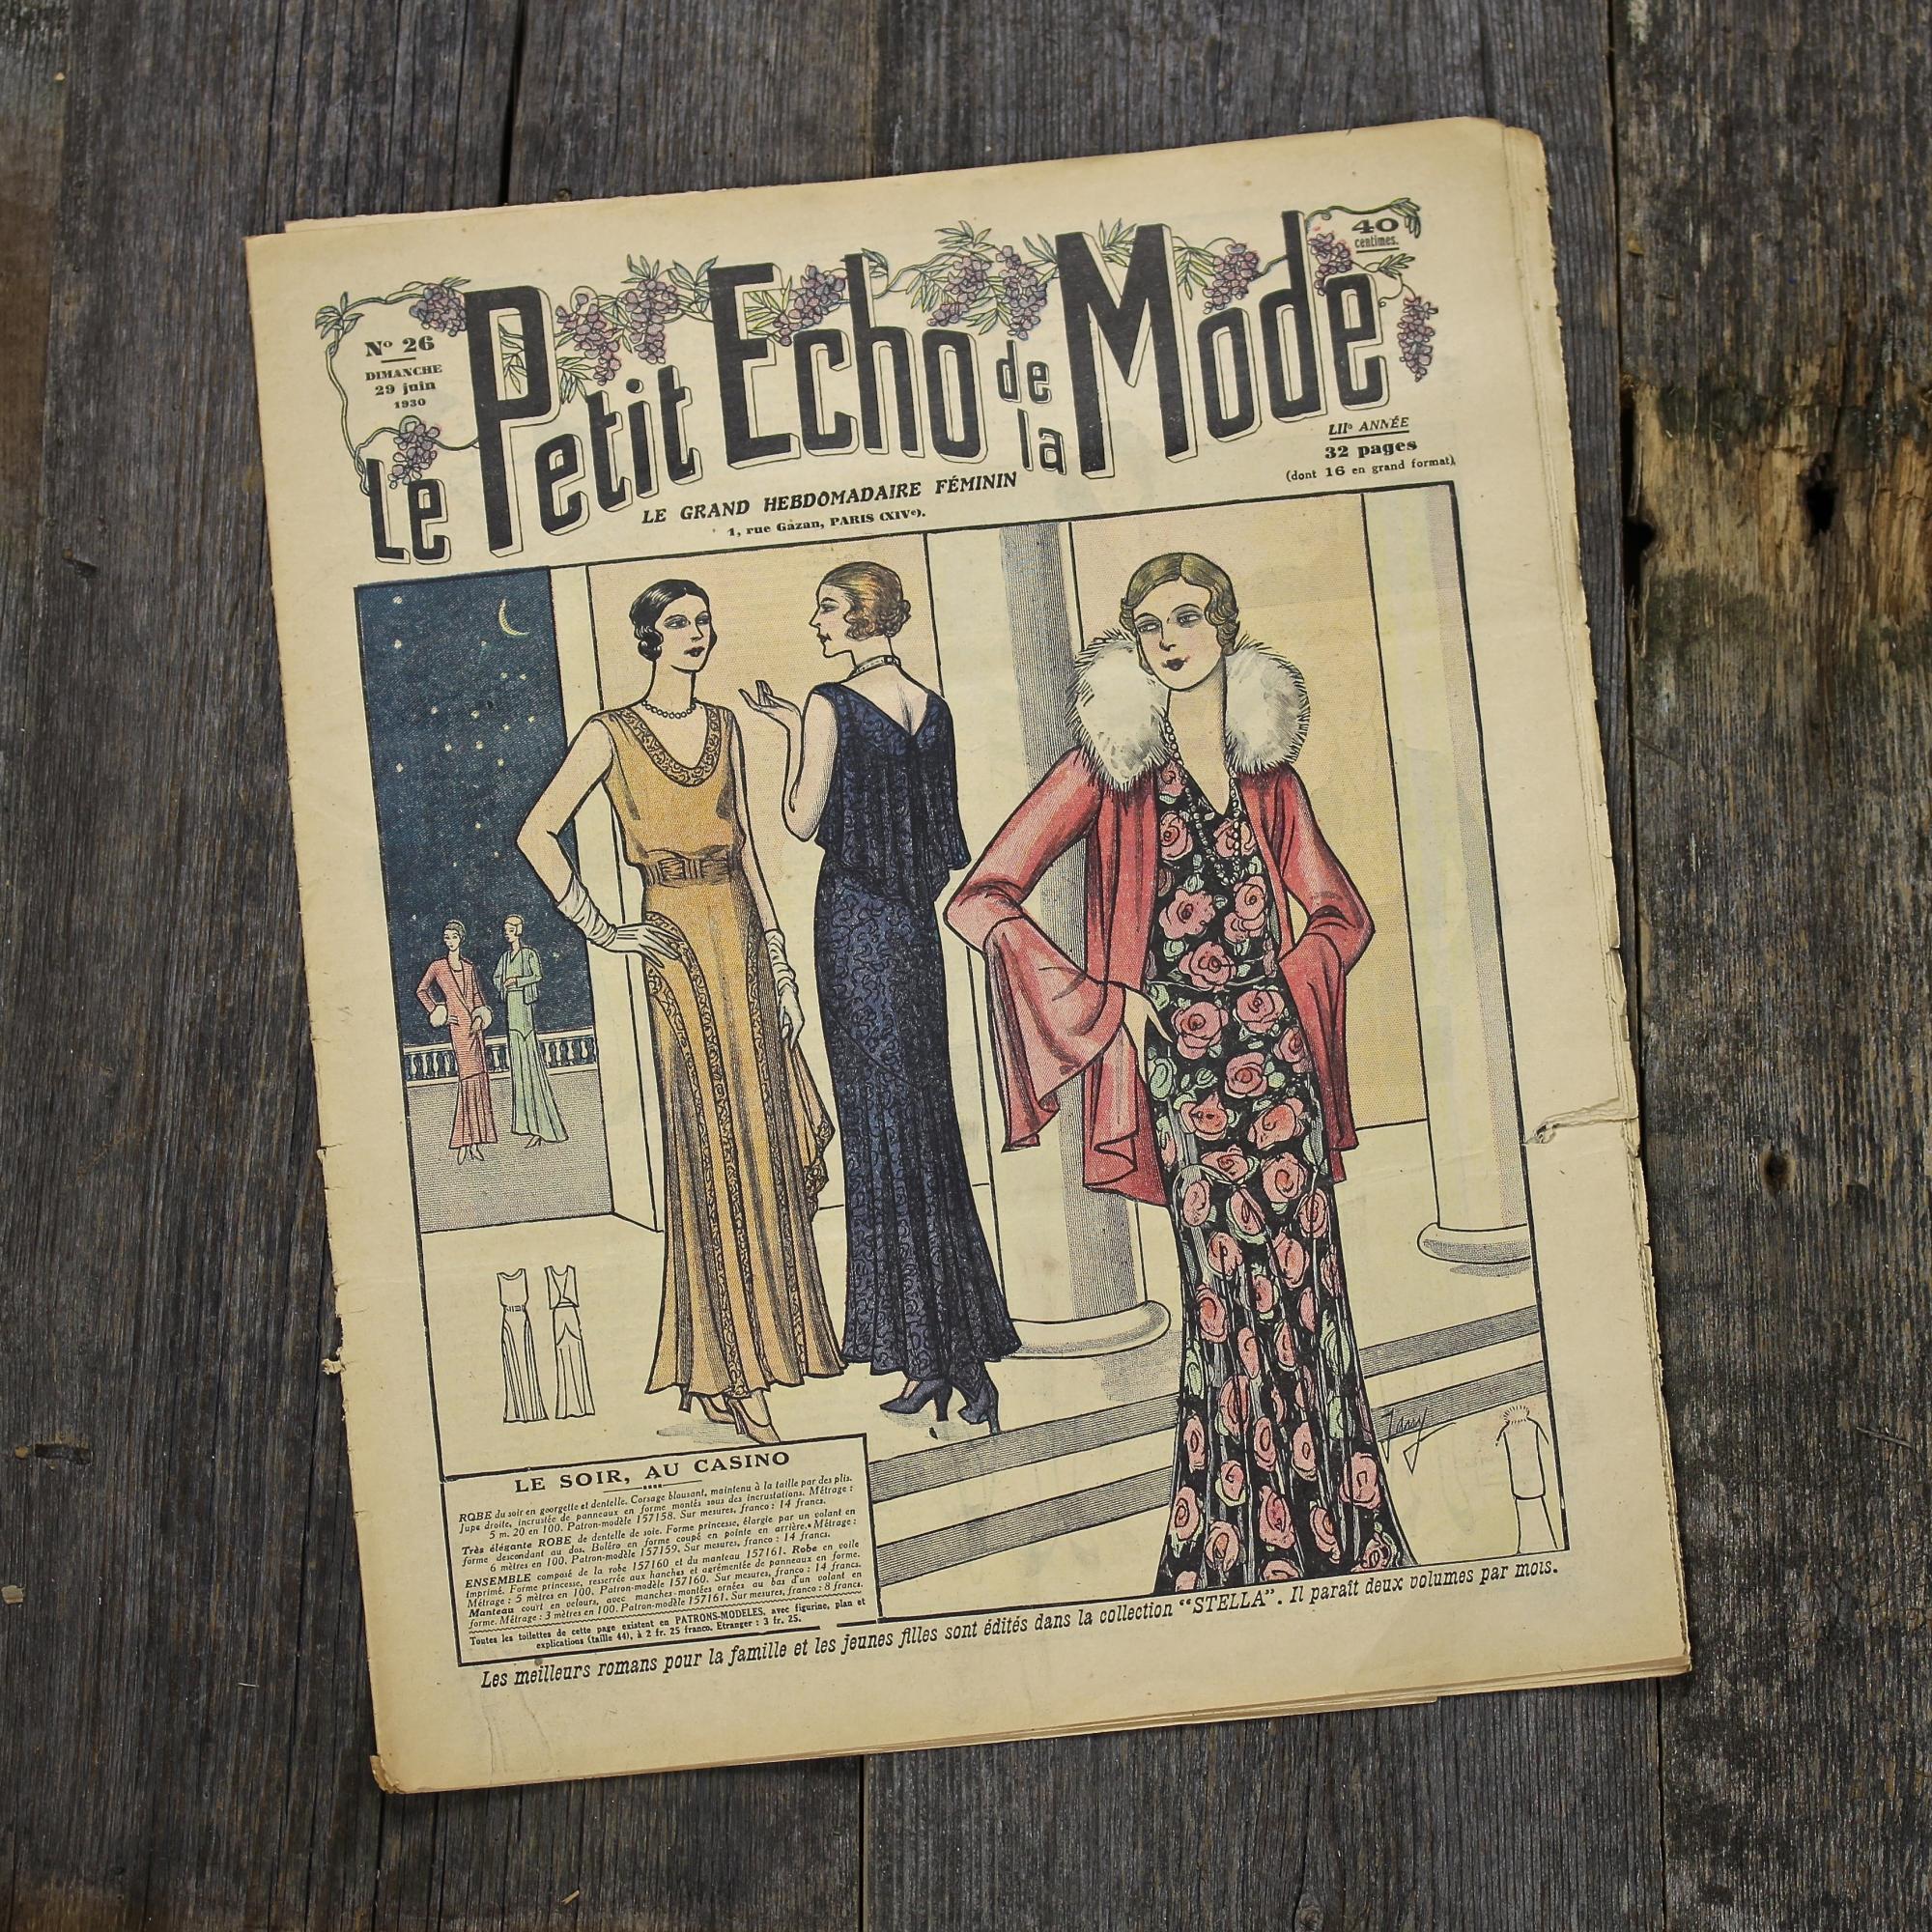 Журнал мод "Le Petit Echo de la Mode"